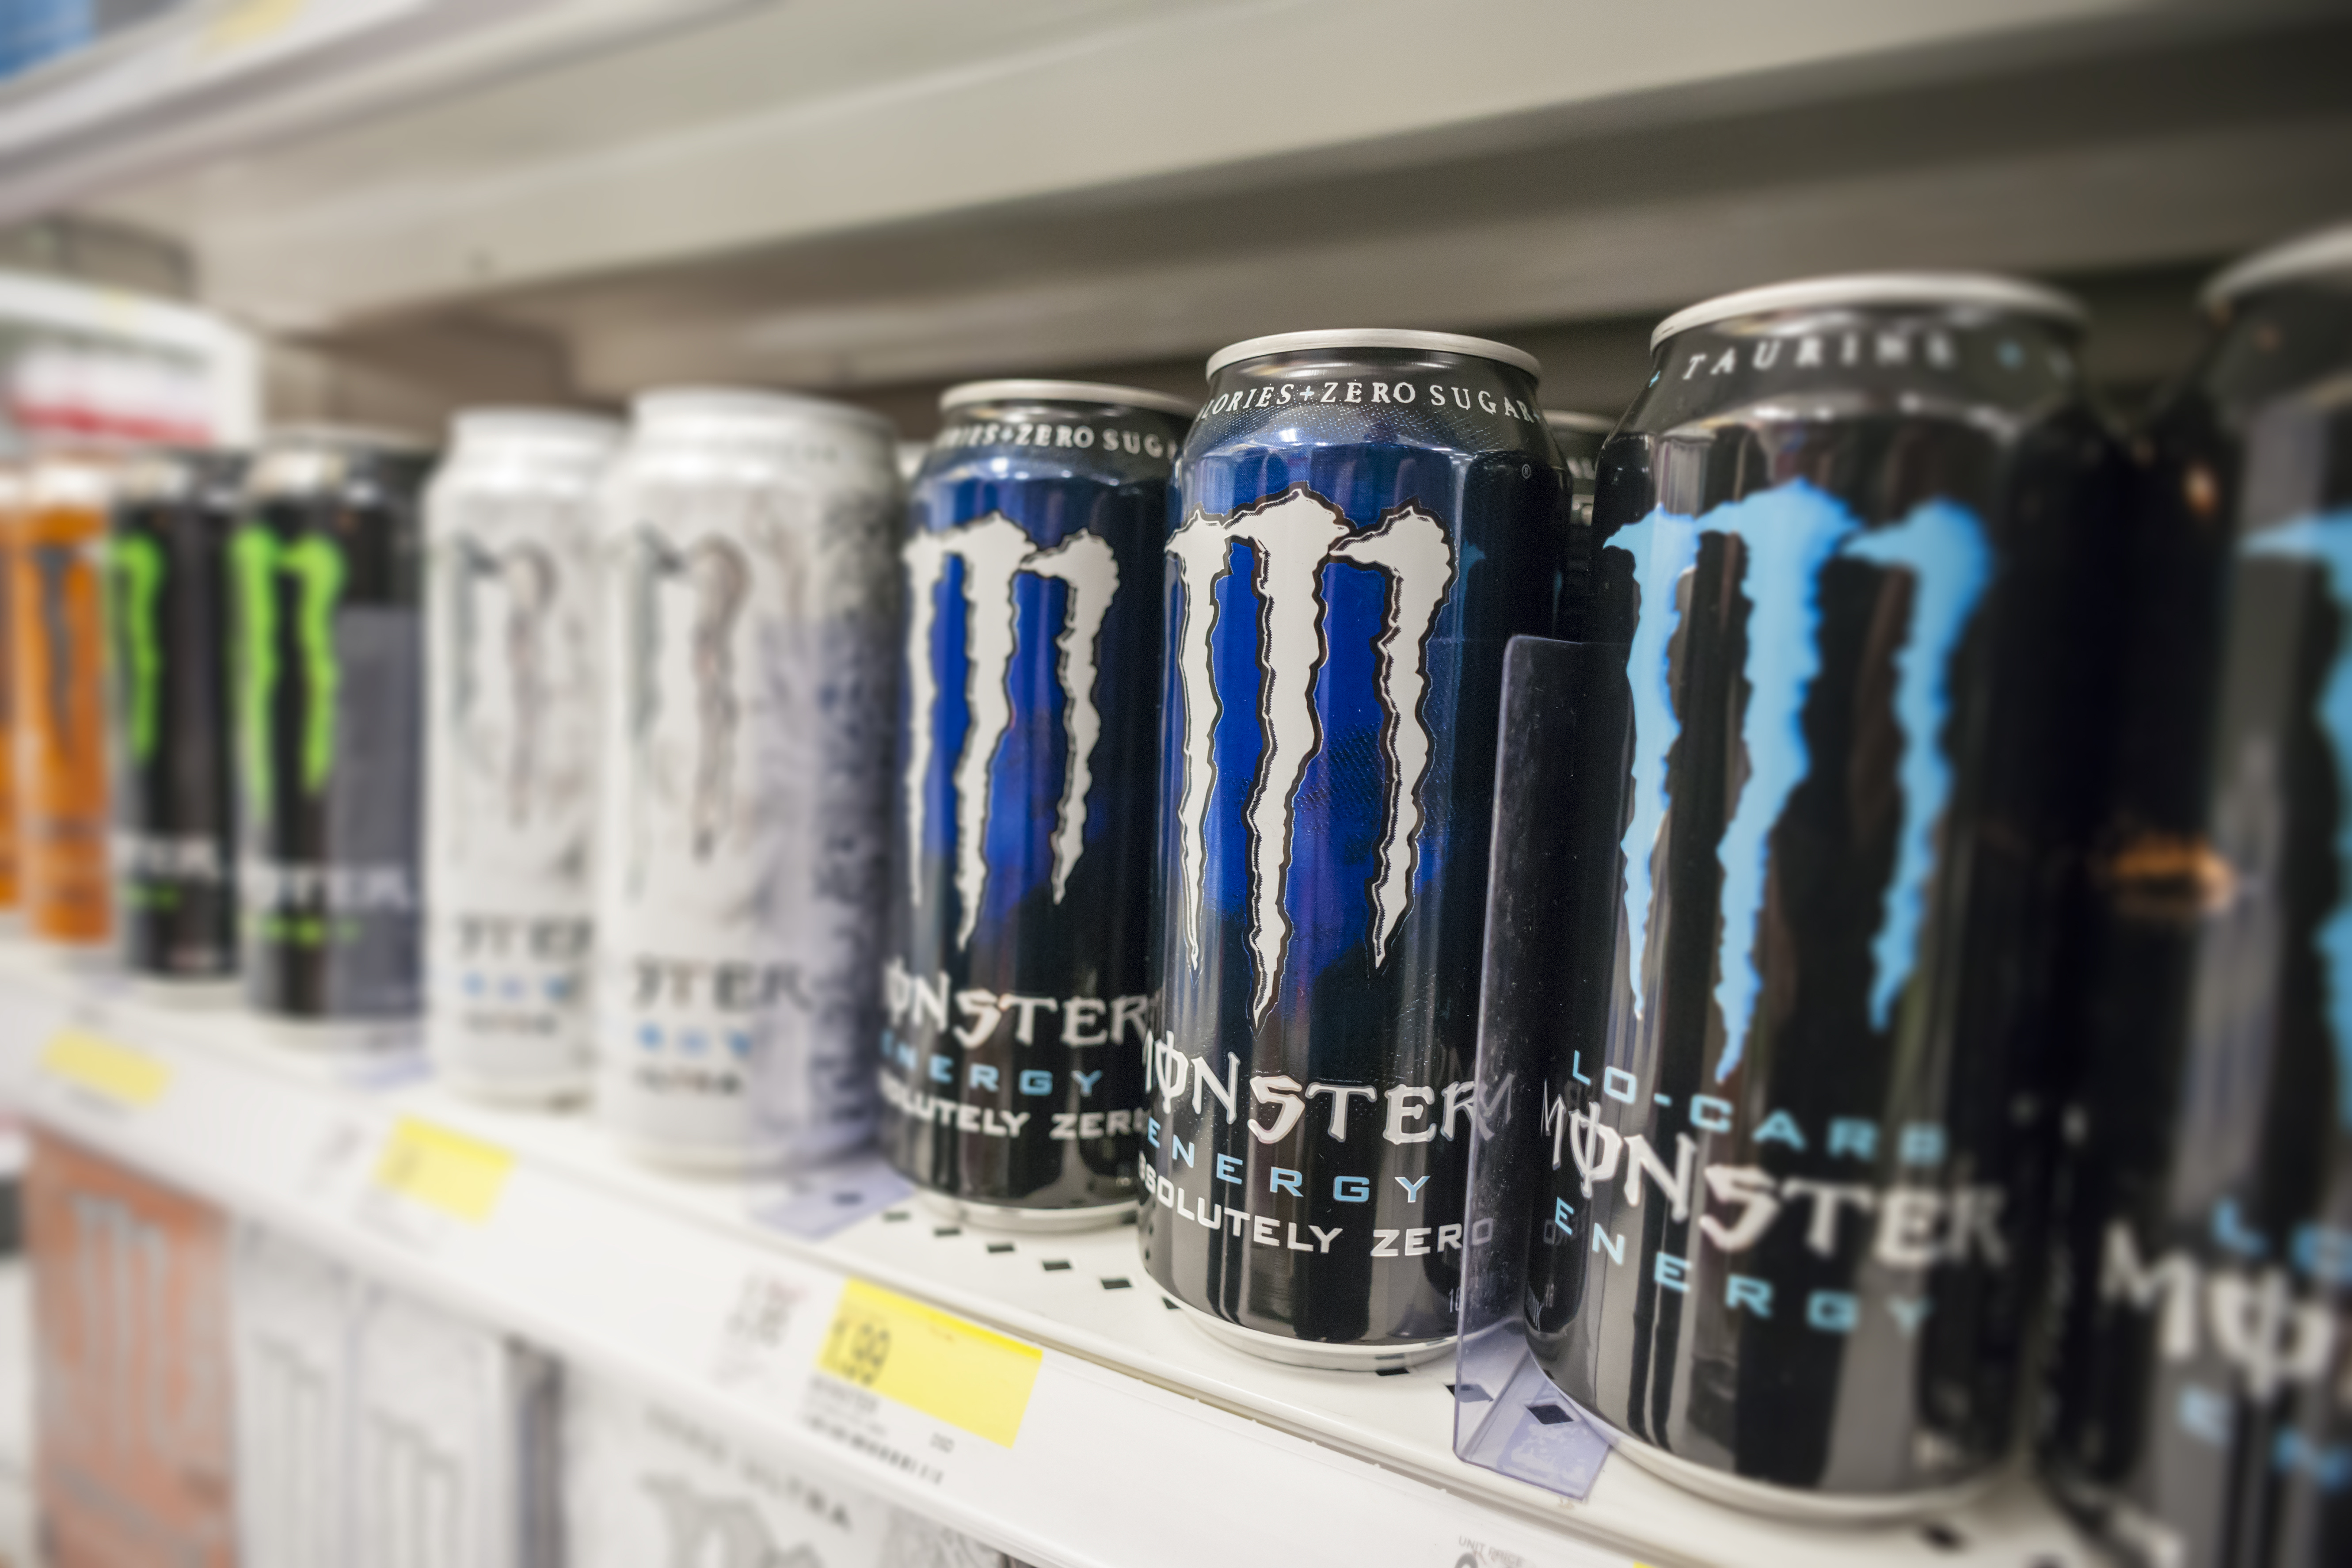 monster energy drink price